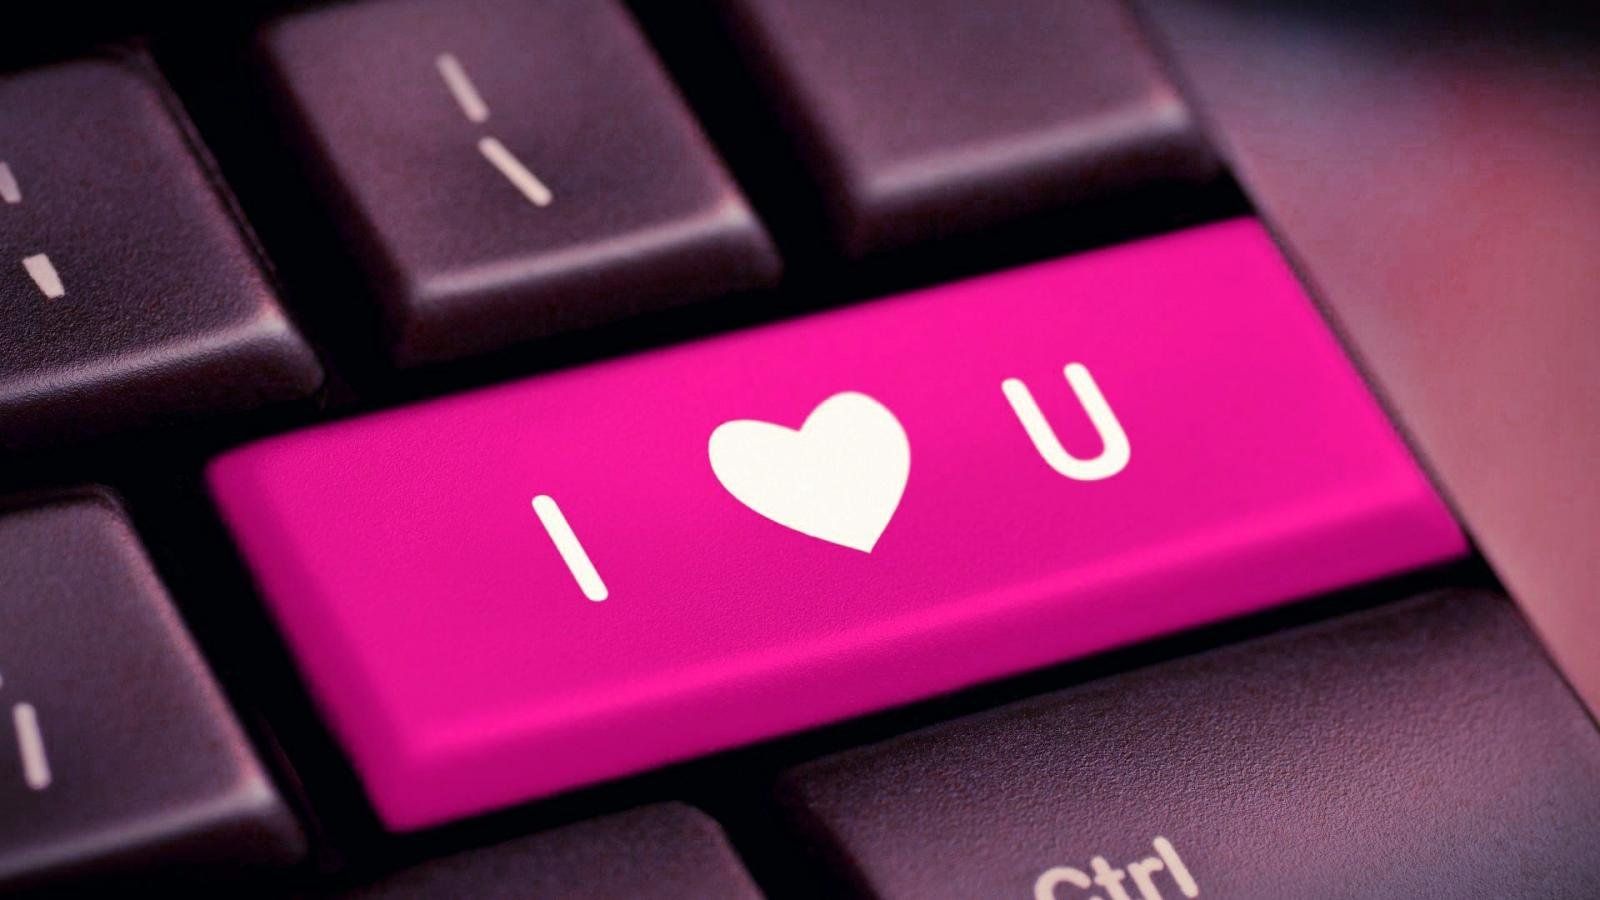 I love you pink computer keyboard wallpaper 1600x900 655387